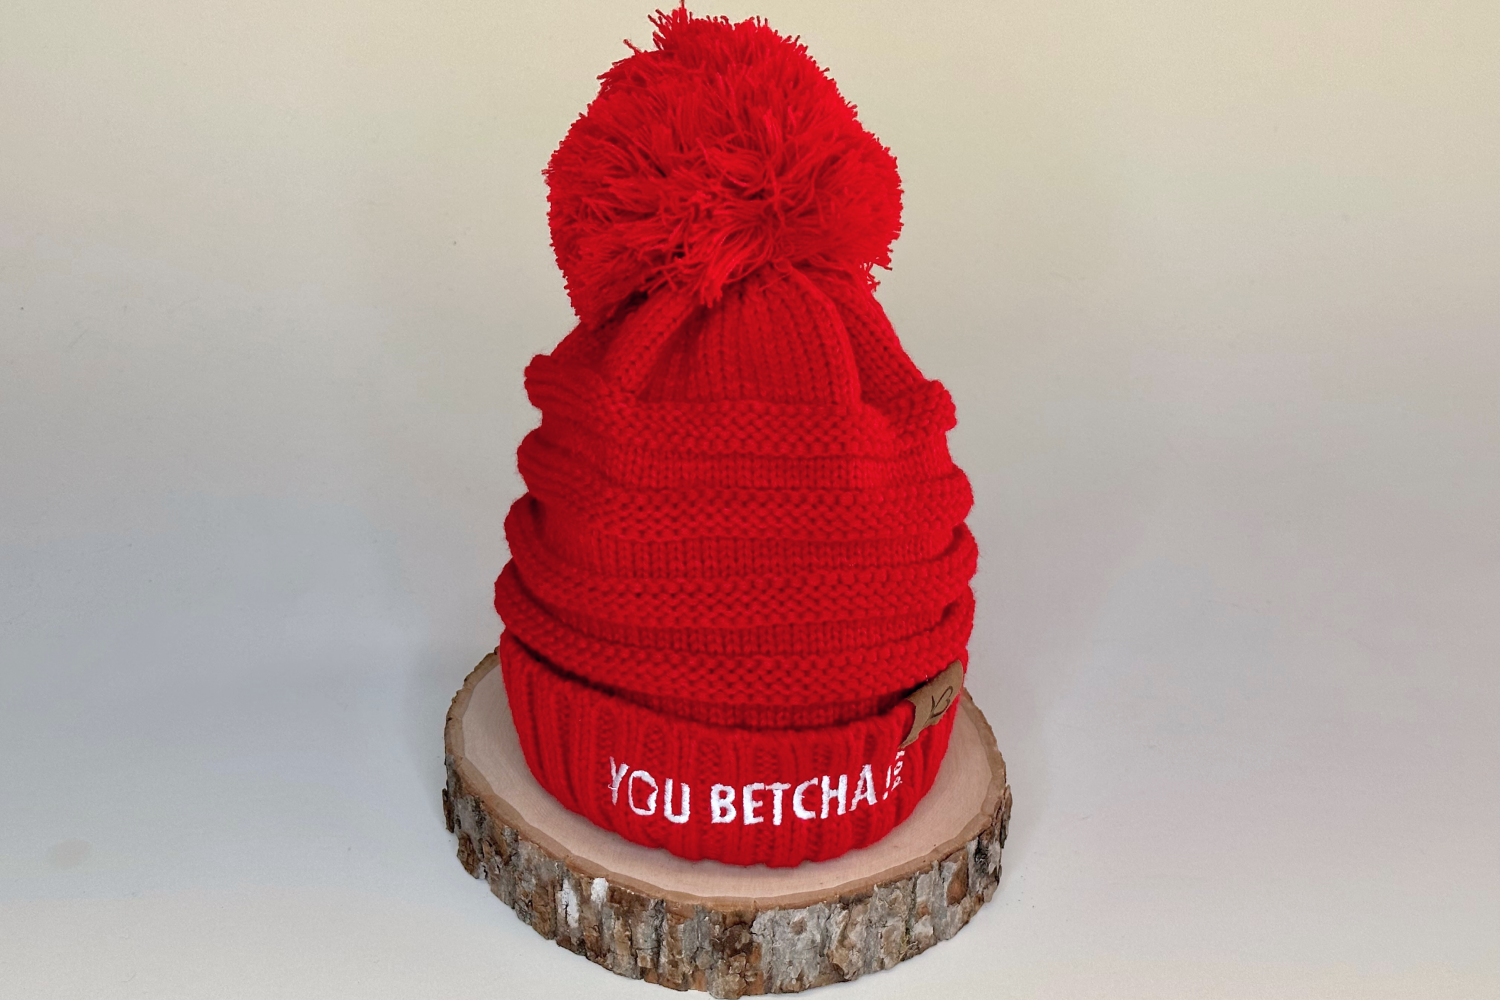 local minnesota gifts warm winter hats